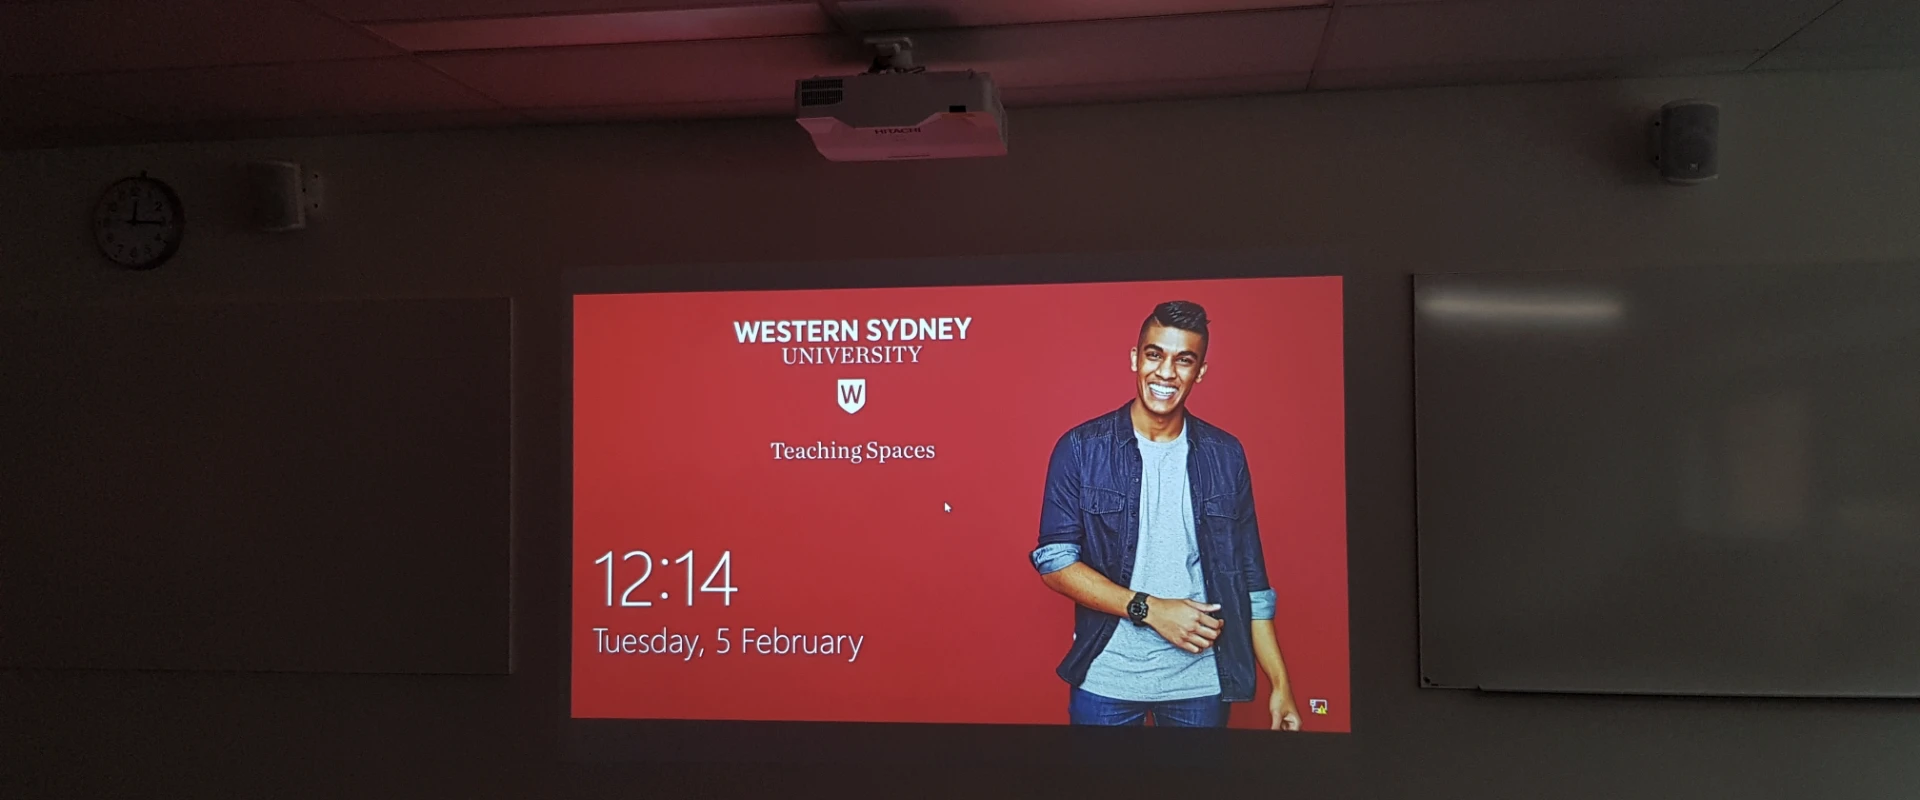 western-sydney-university-2